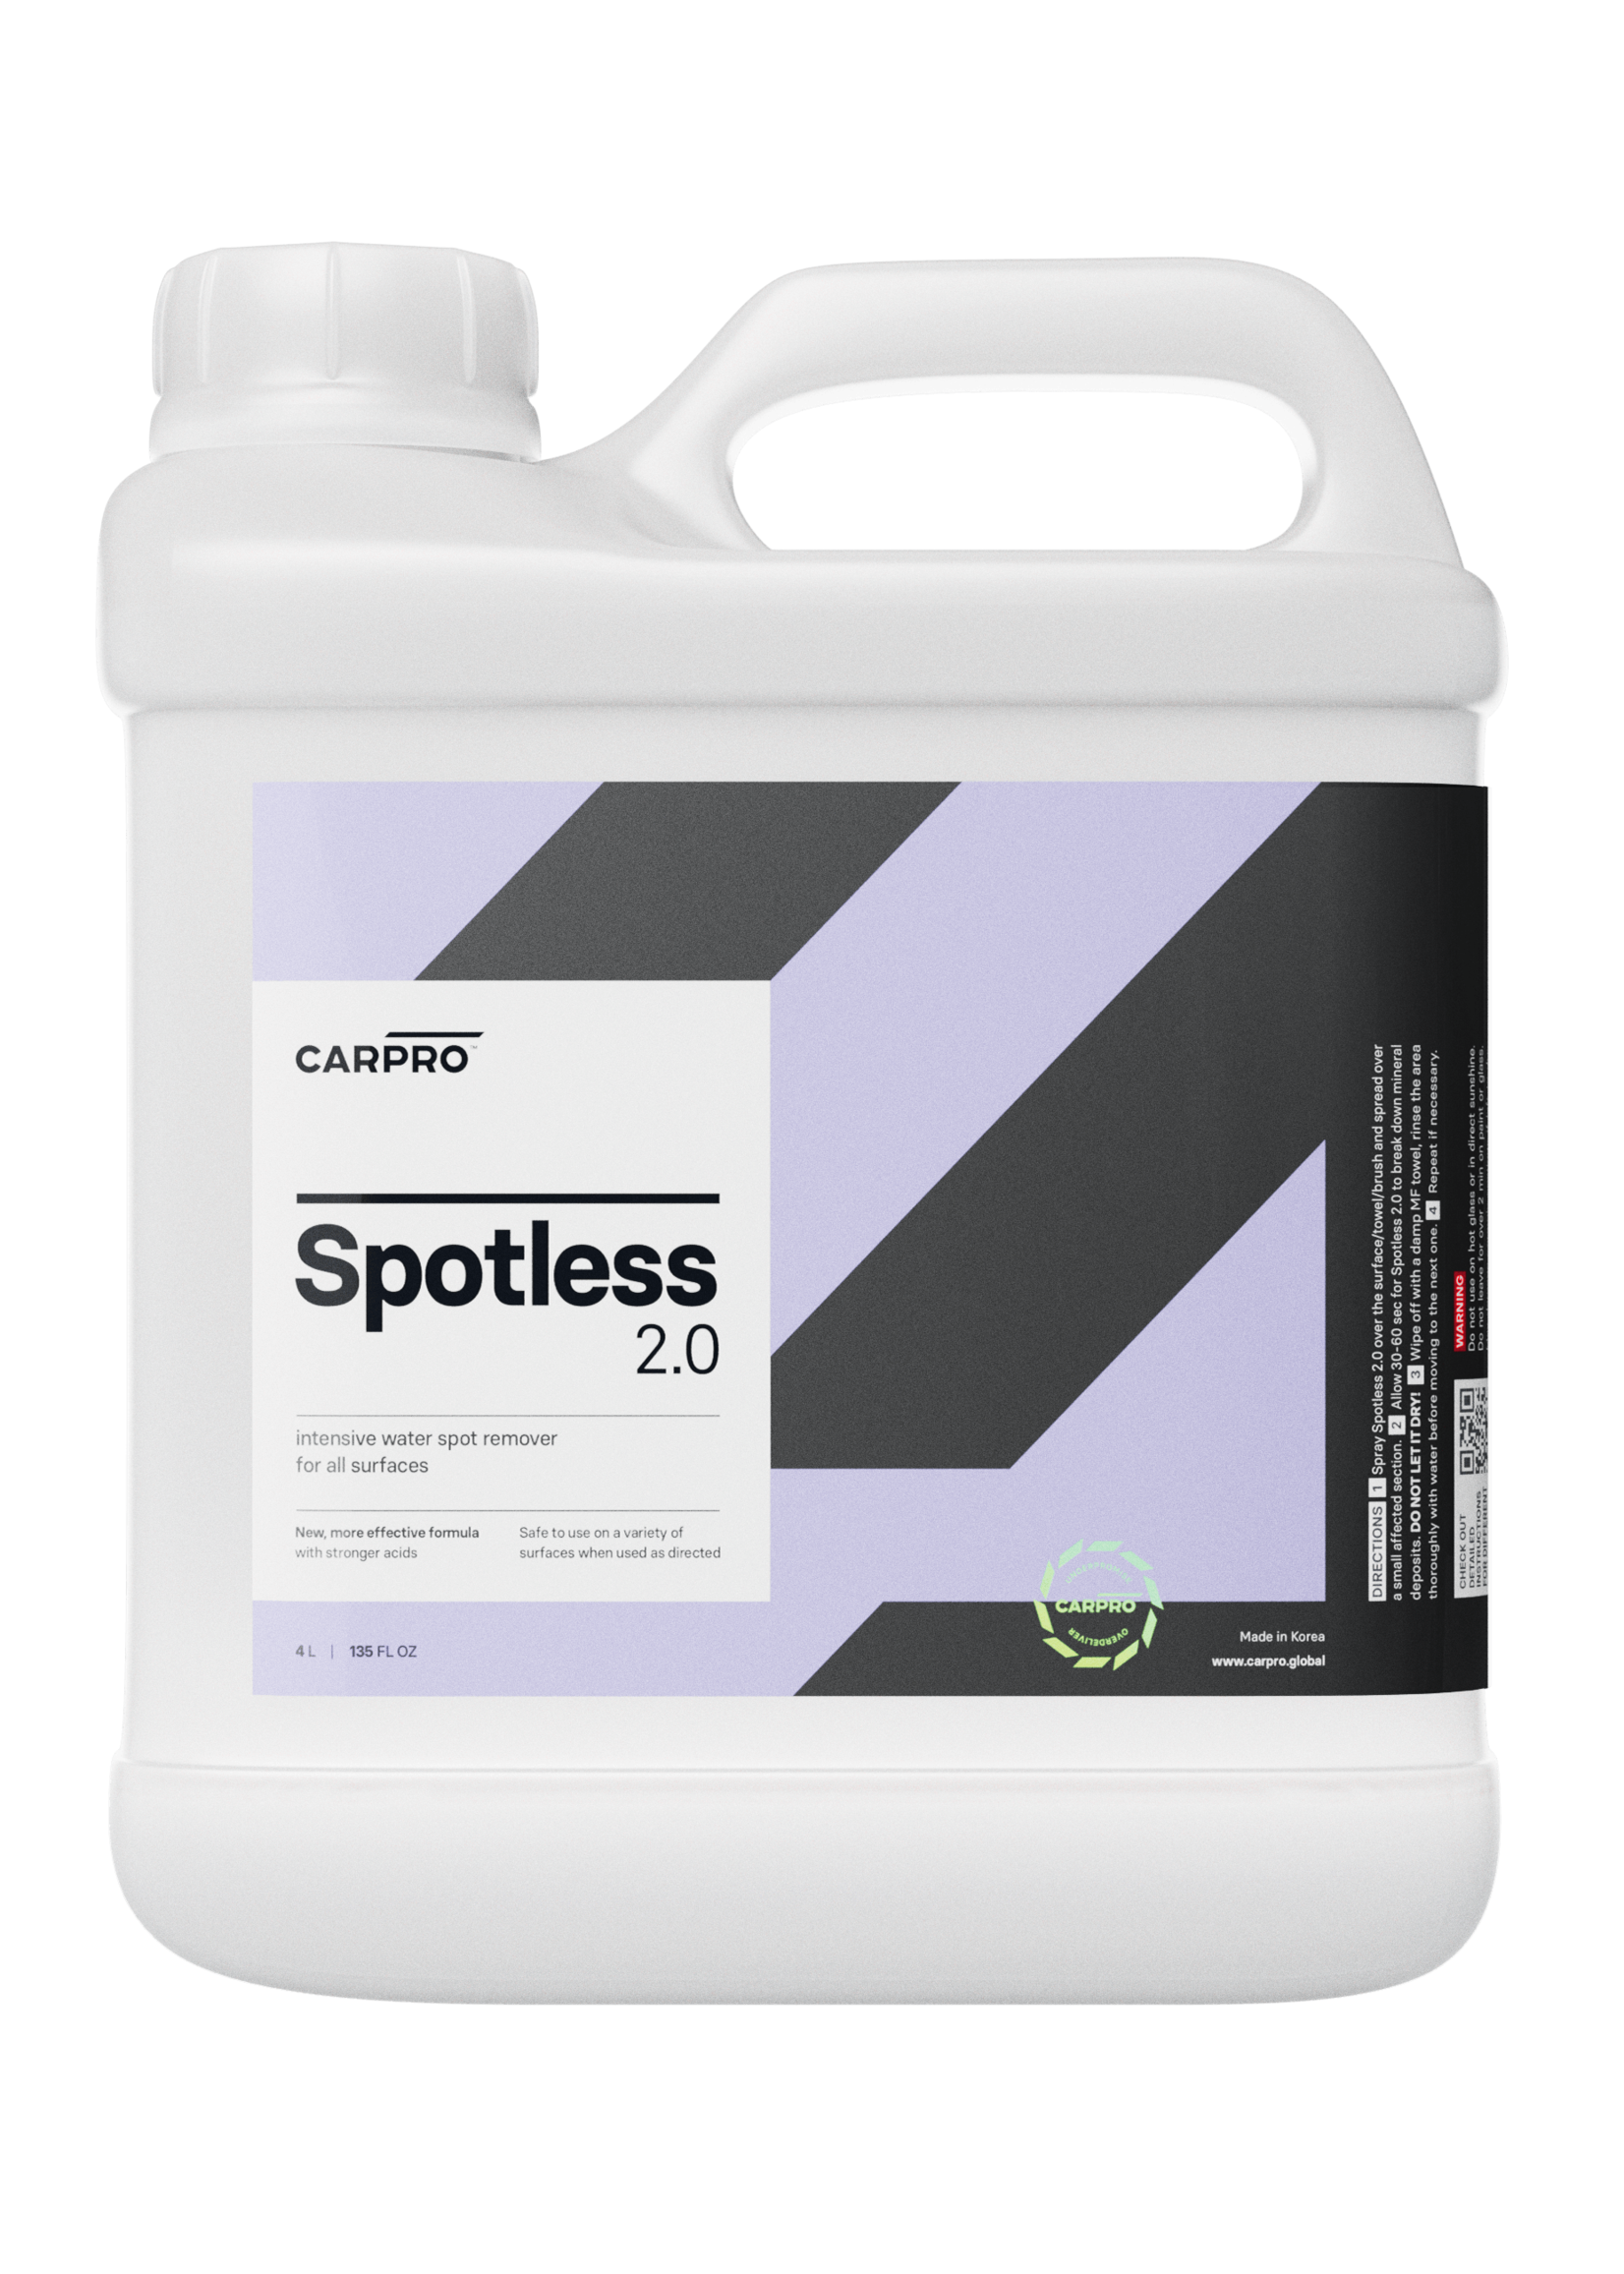 CARPRO Spotless 2.0 Water Spot Remover